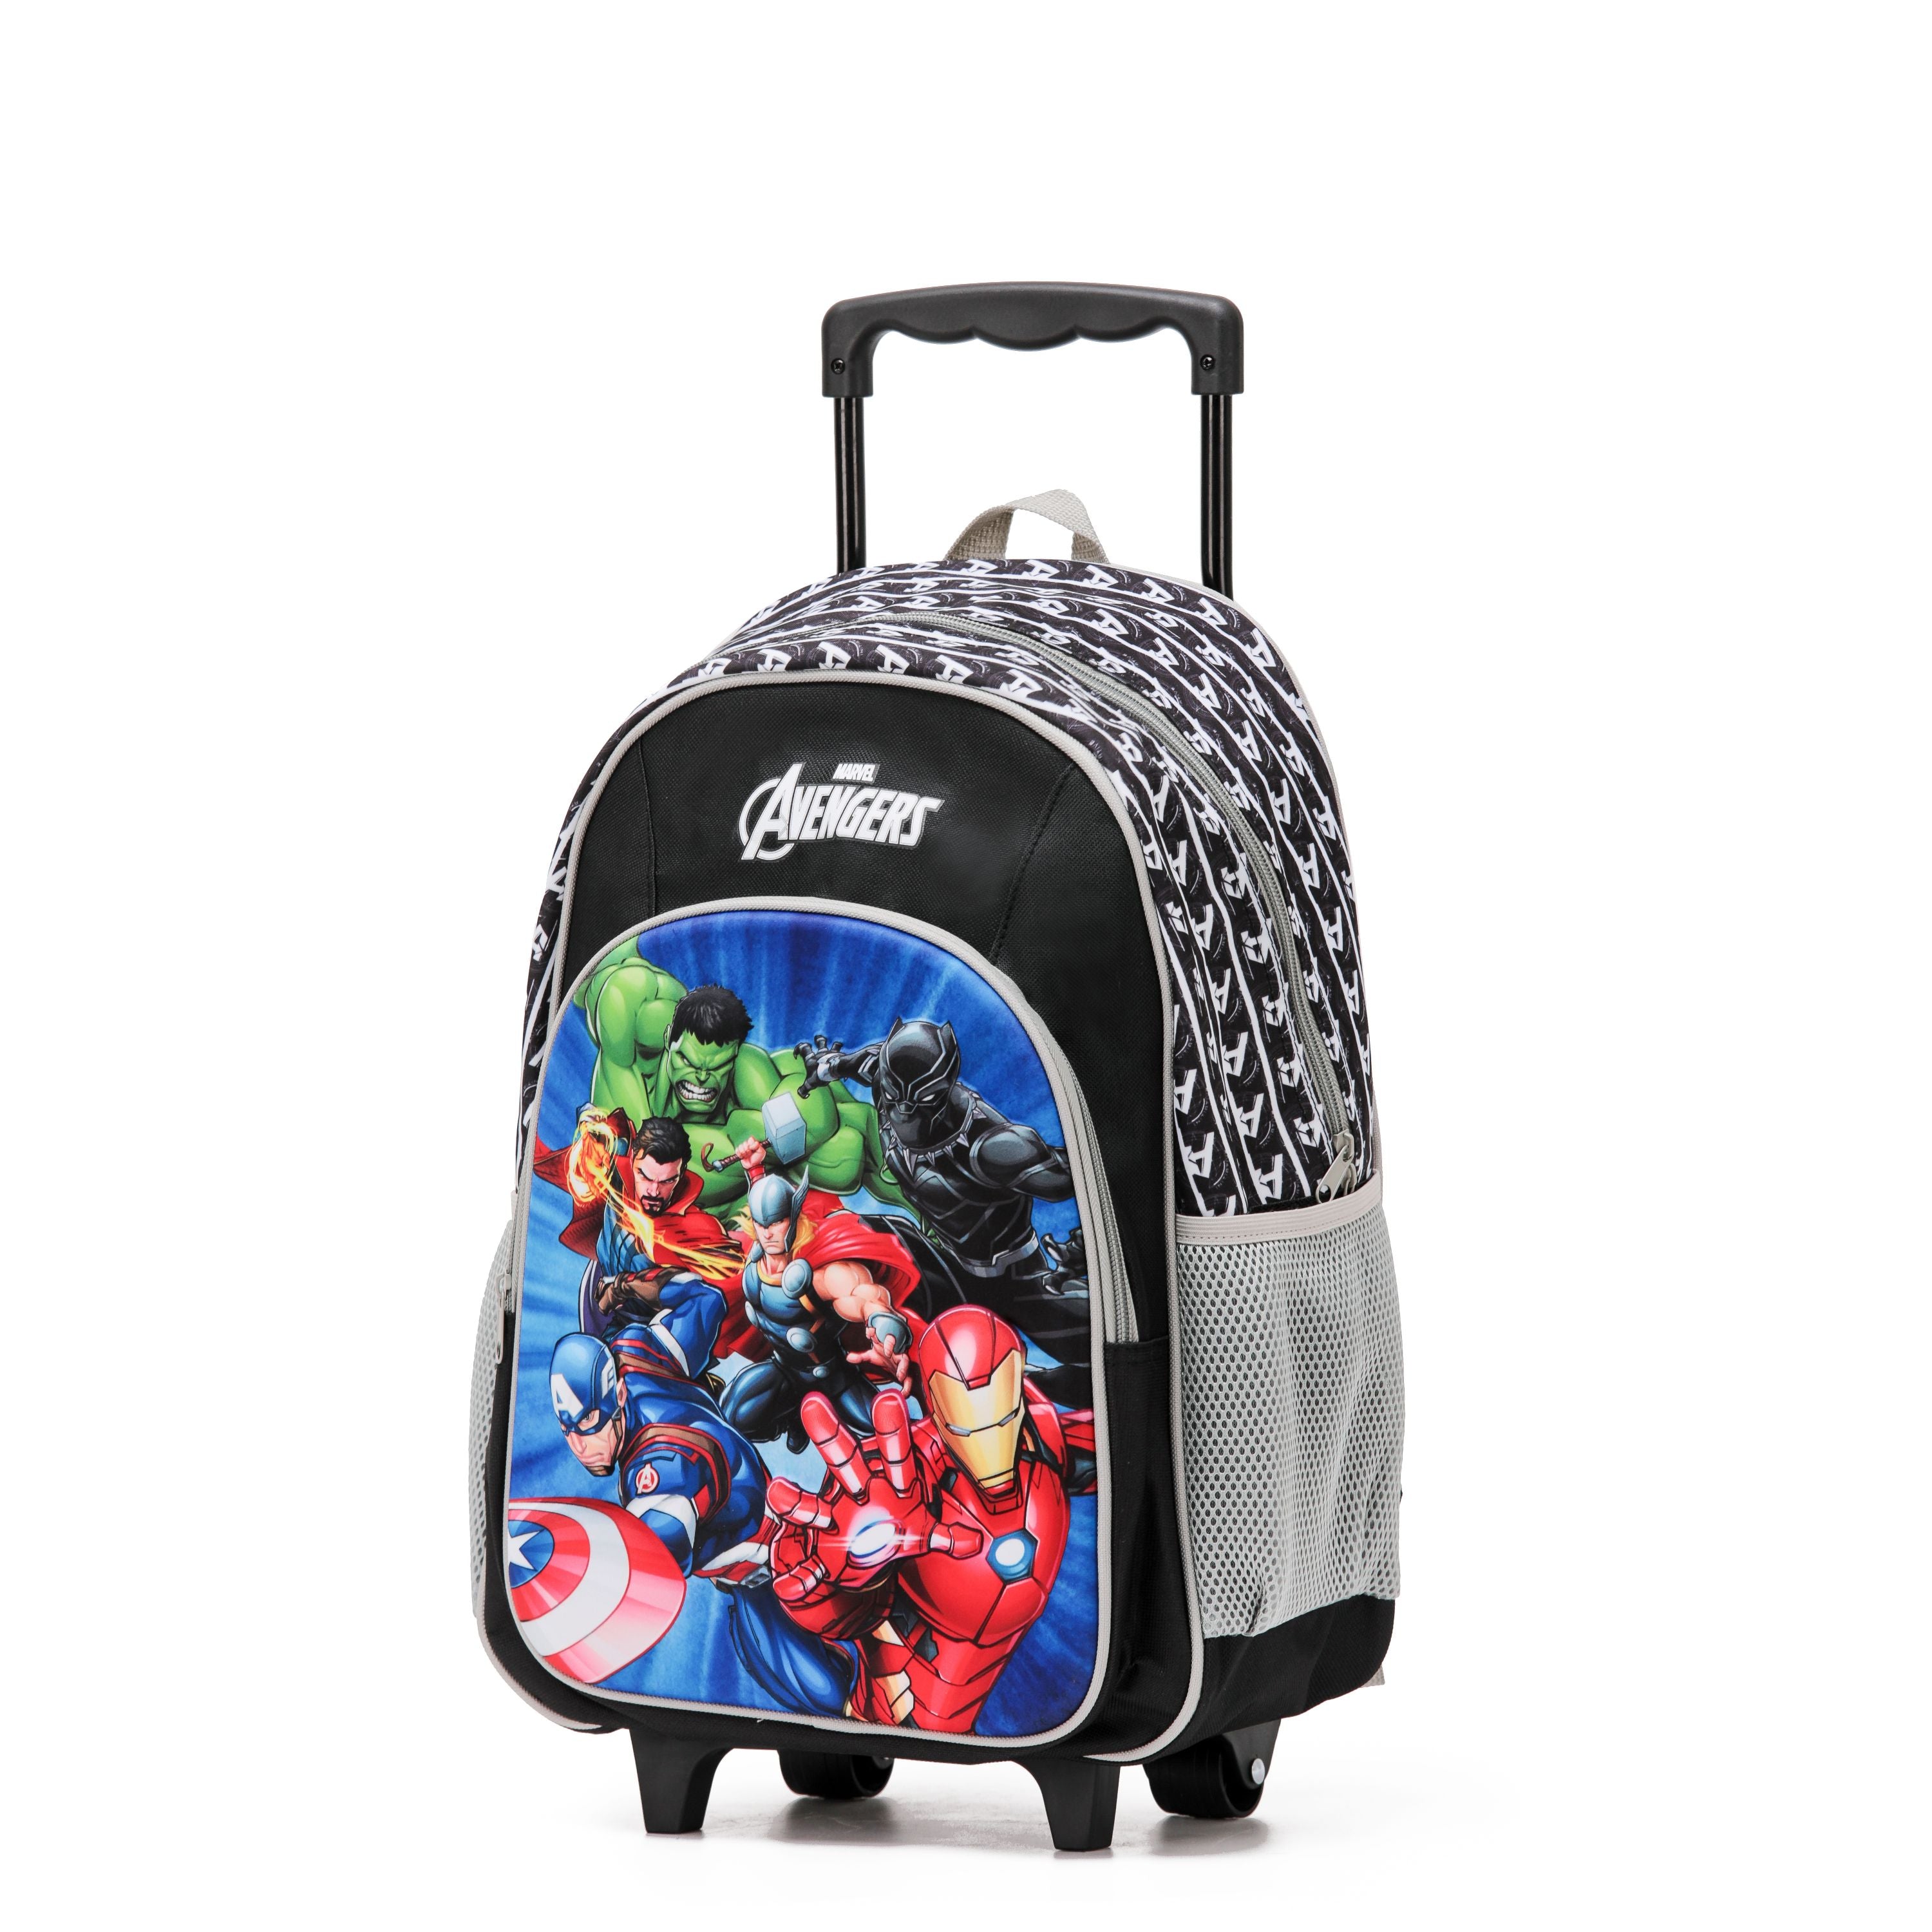 Marvel - Mar091 17in Avengers backpack trolley bag - Black